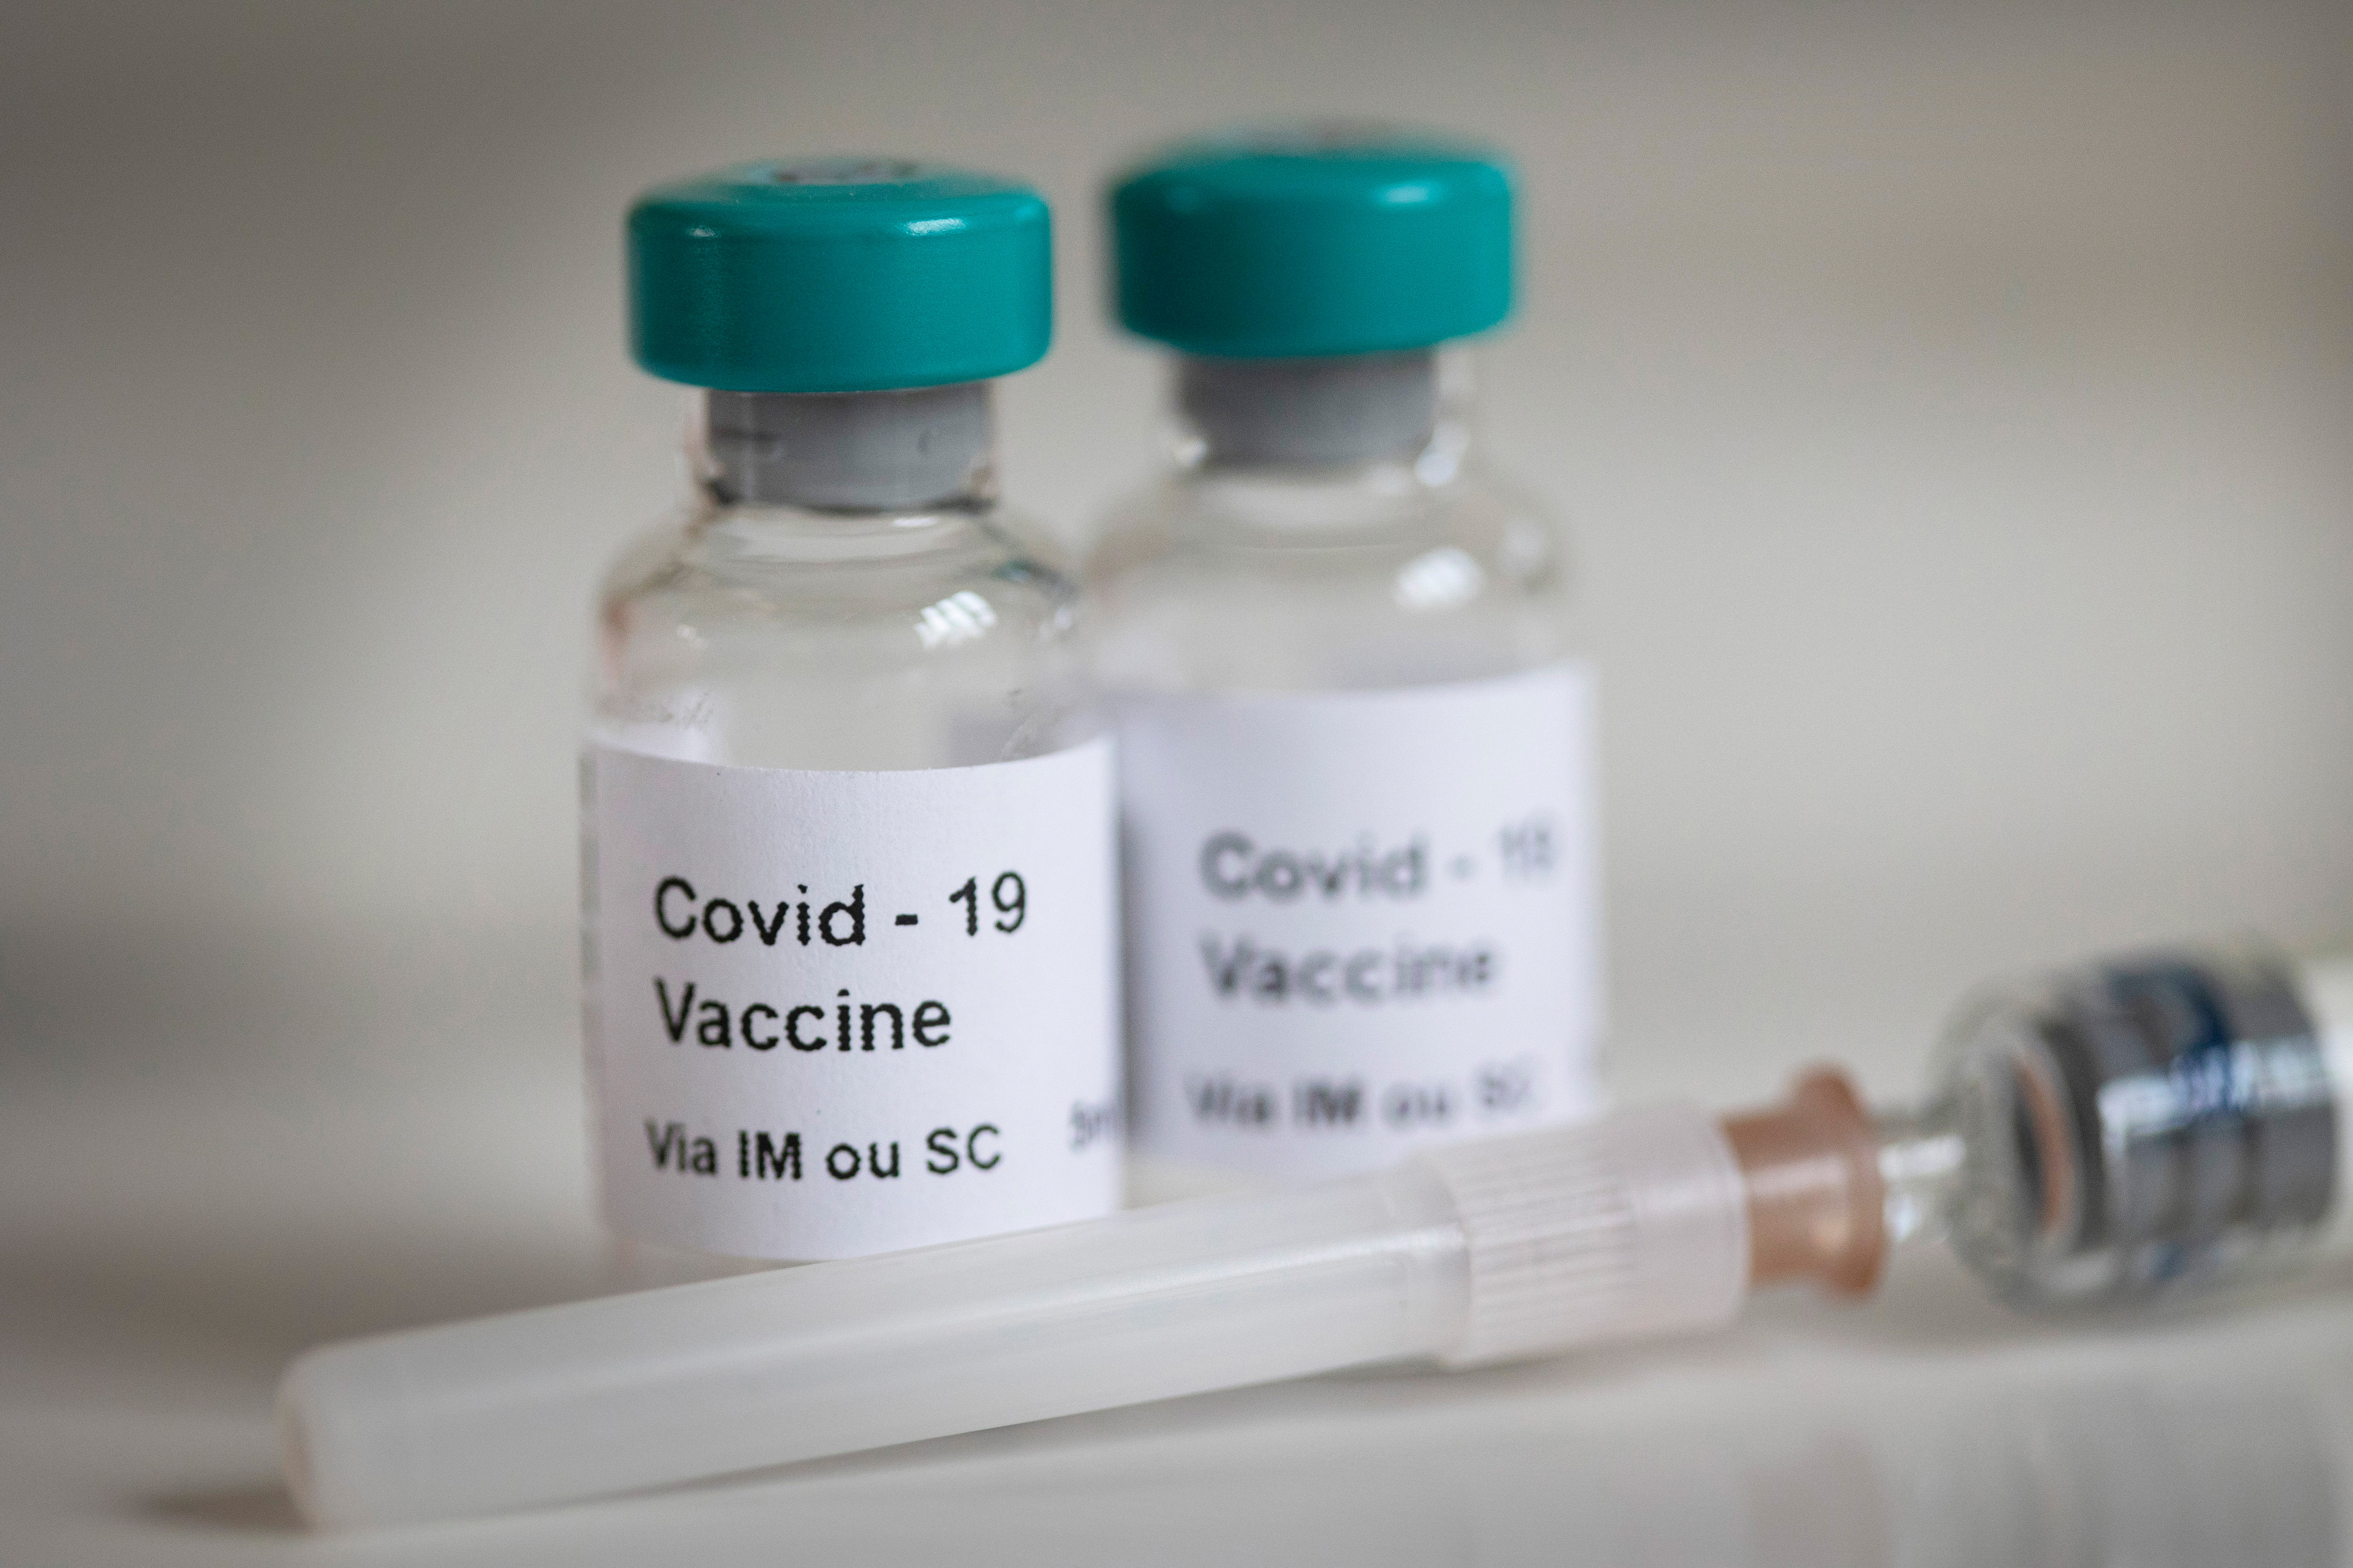 Vaccine against Covid-19